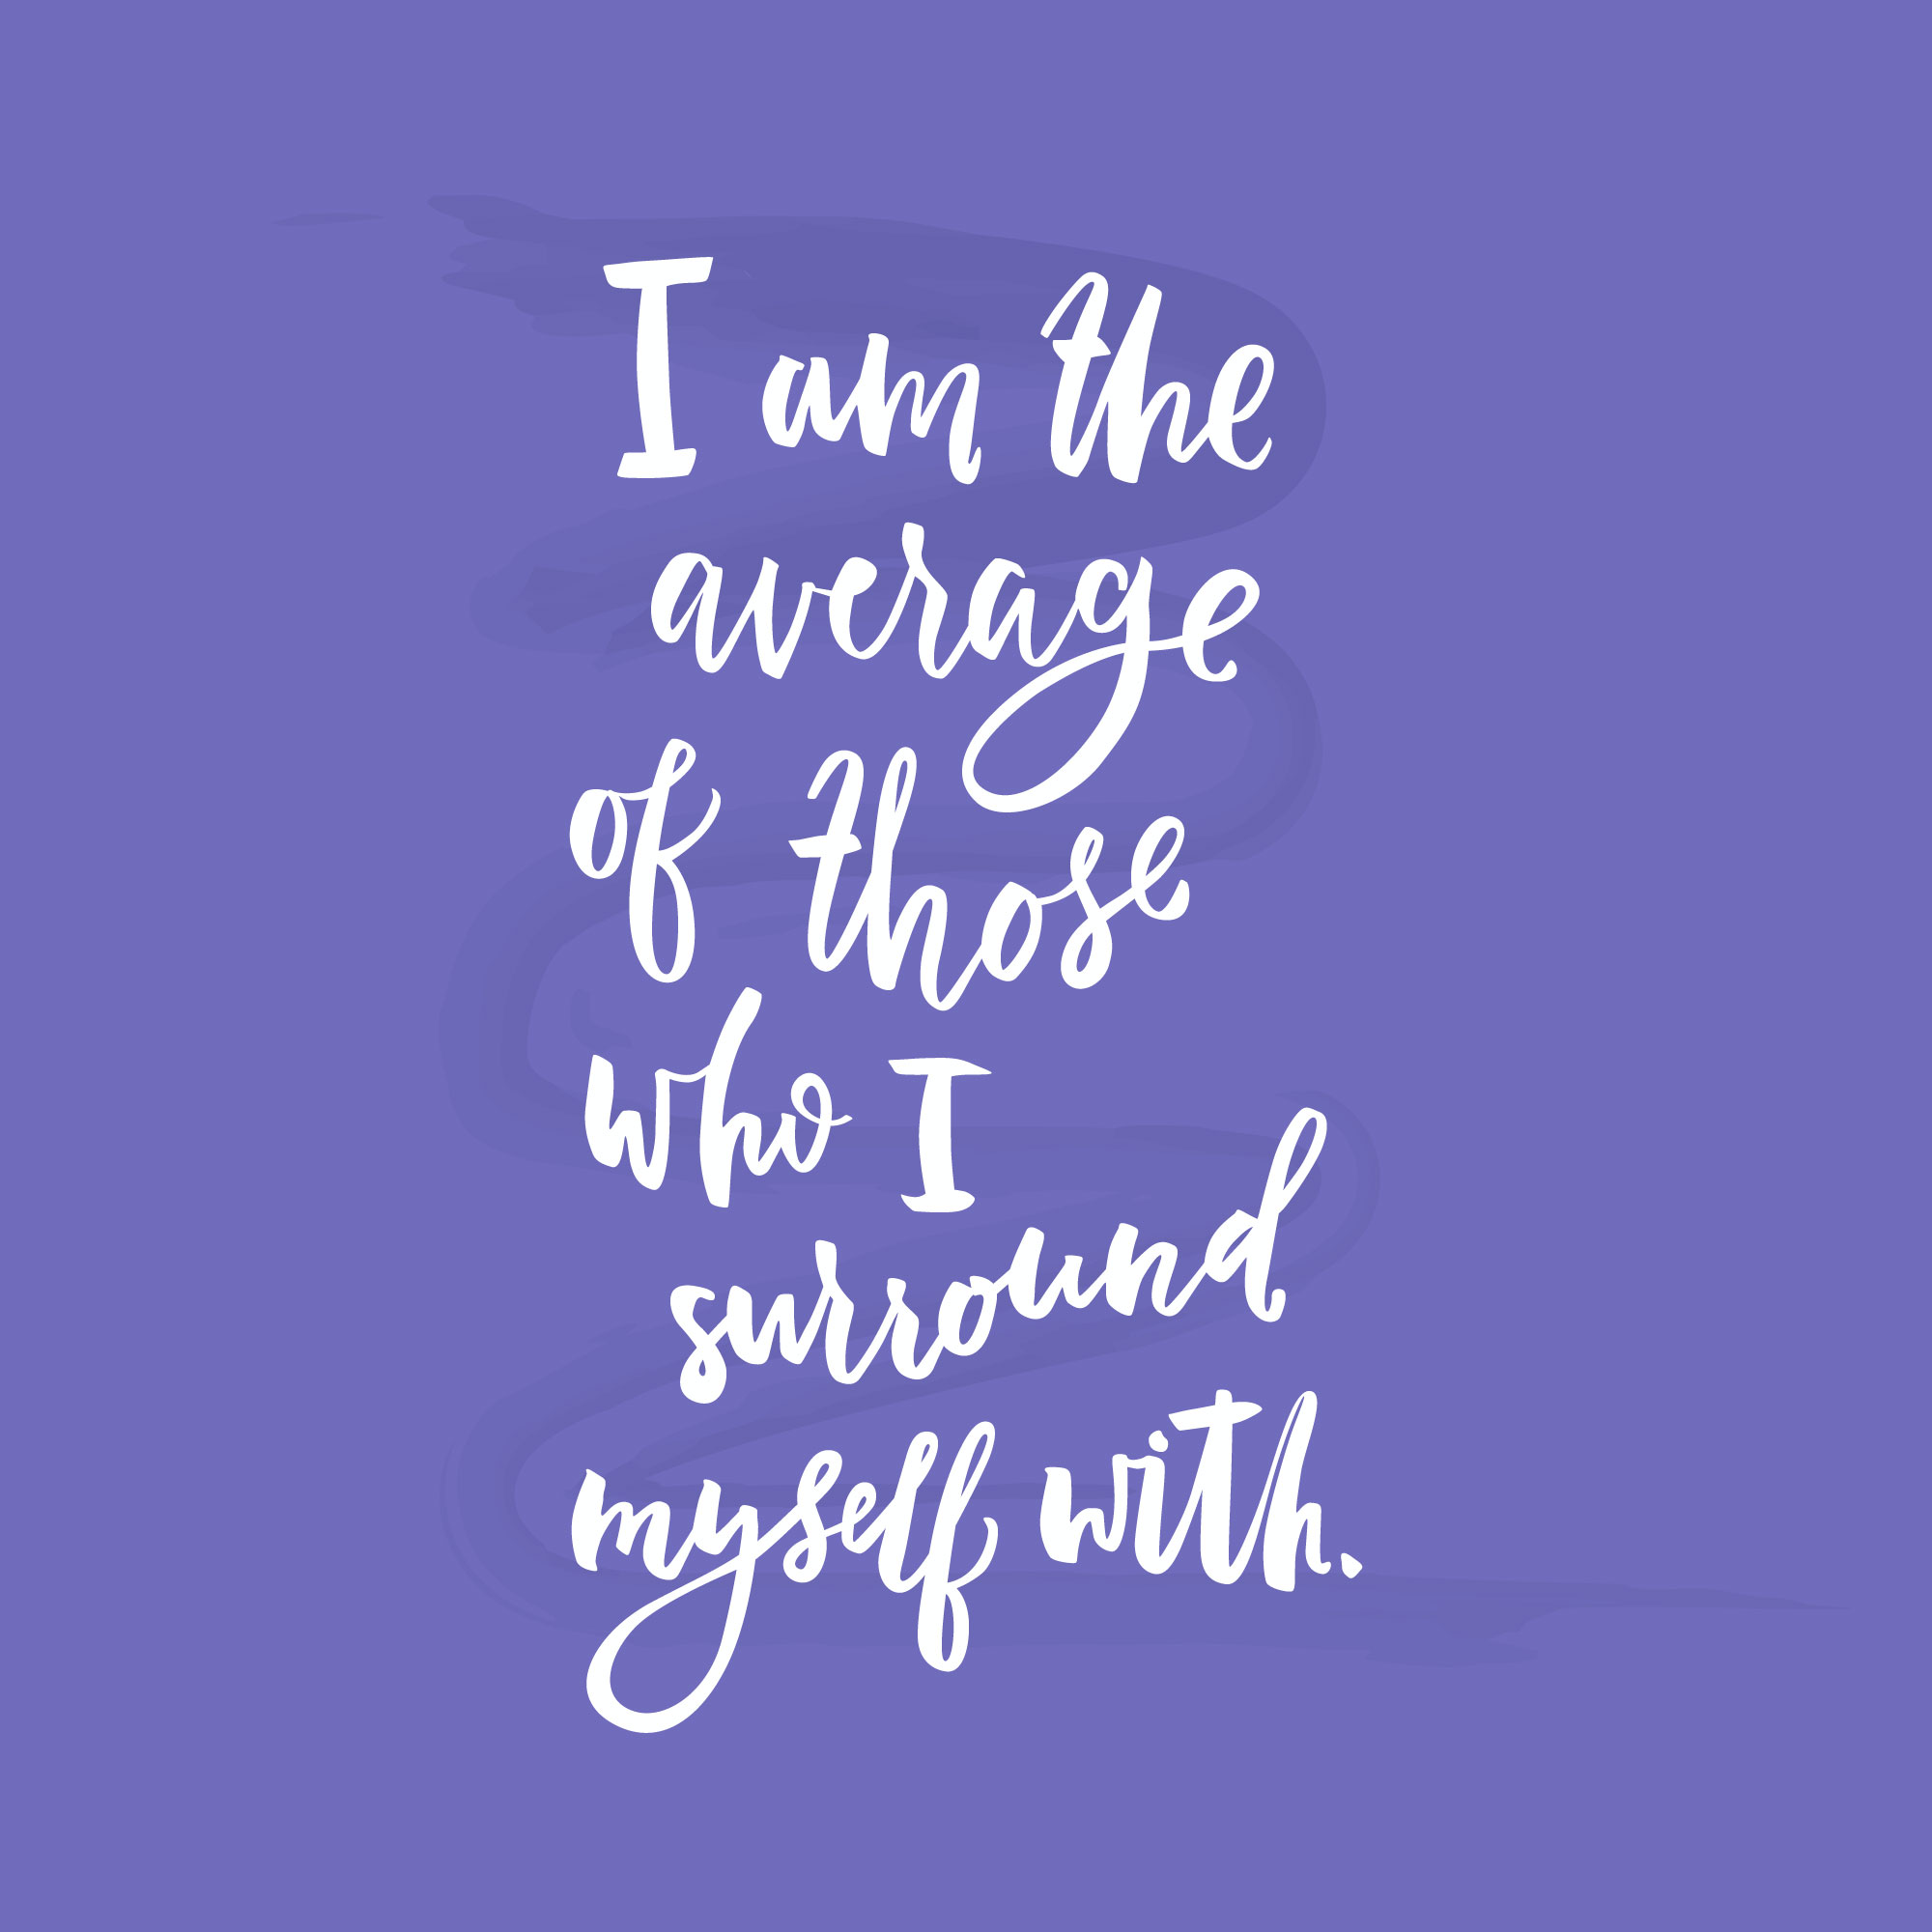 I am the average of those who I surround myself with.